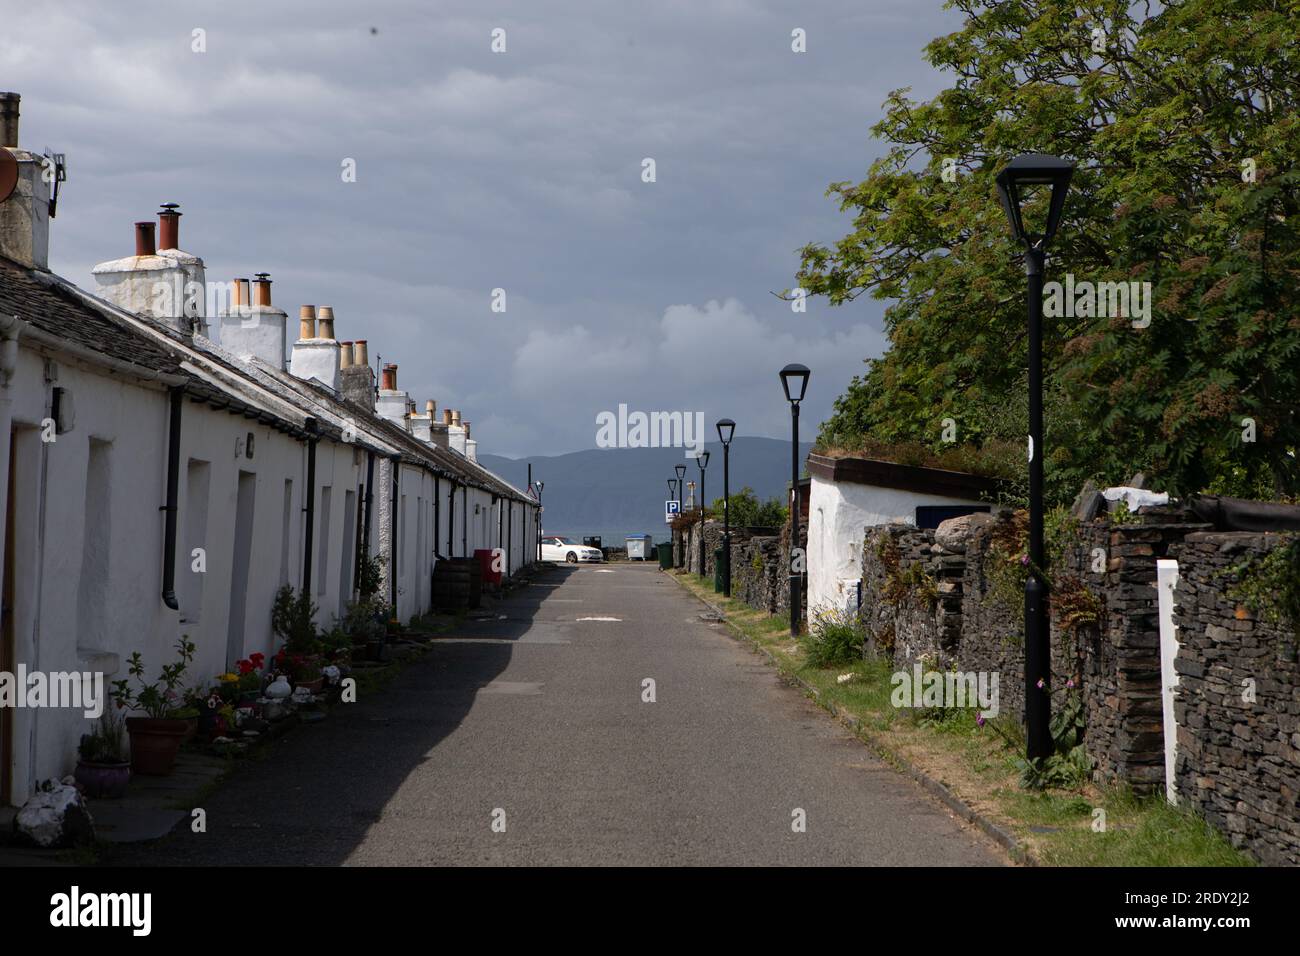 Houses in Easdale village, Isle of Seil, Slate Islands, Scotland Stock Photo